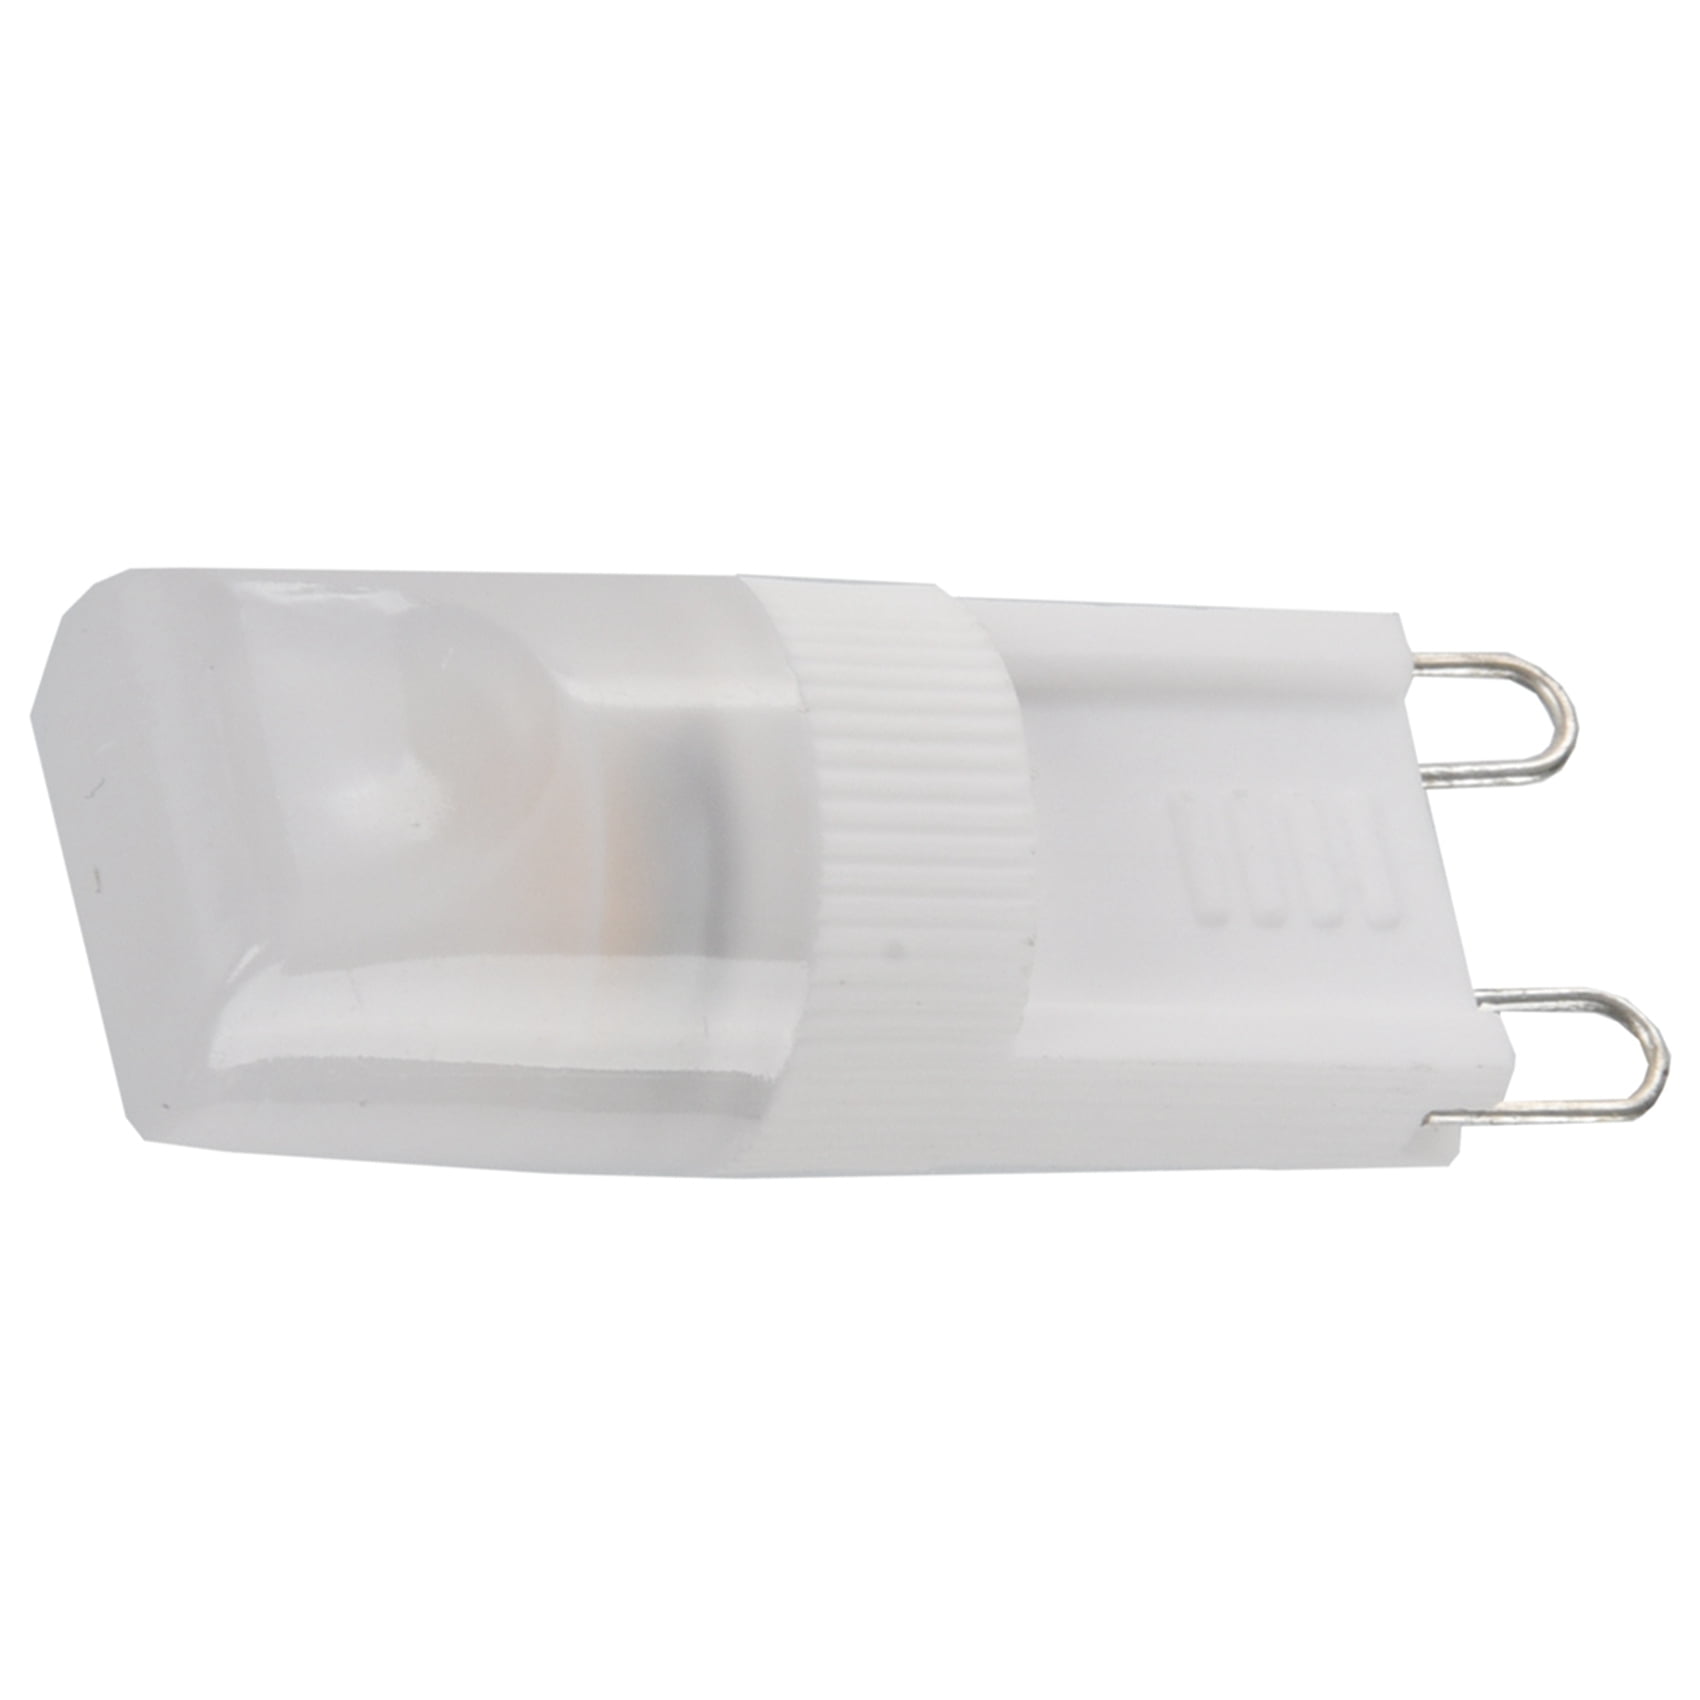 20X G9 1W LED High Power Light Bulb Lamp Warm White 3500 K - Walmart.com